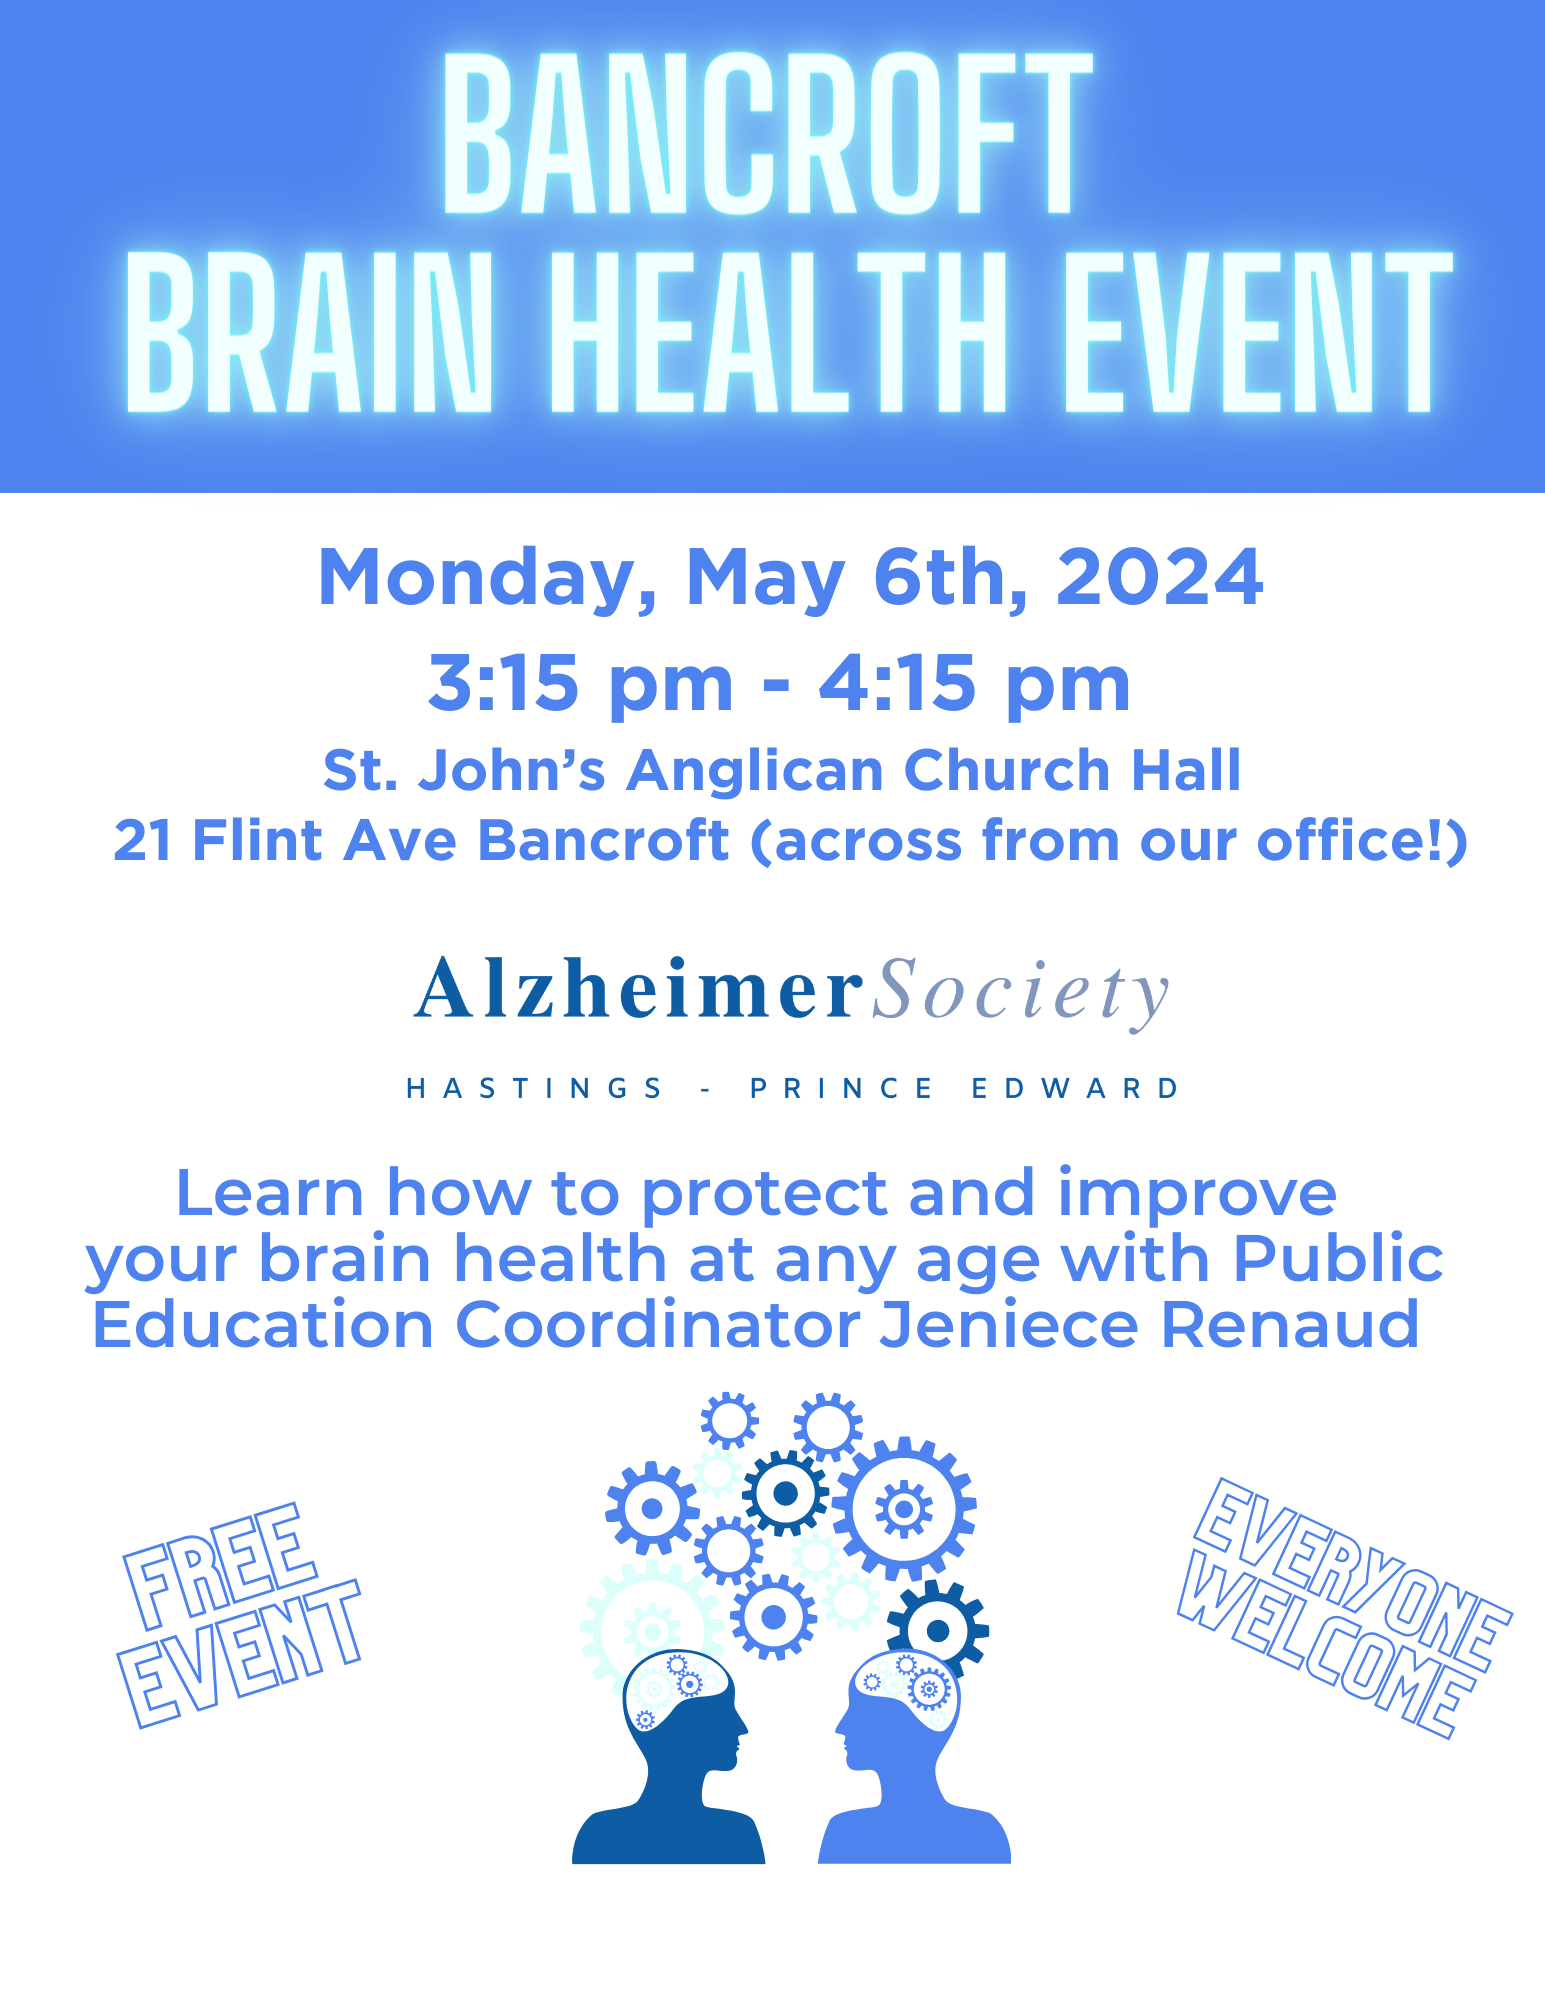 Bancroft Brain Health Event on May 6th, 2024